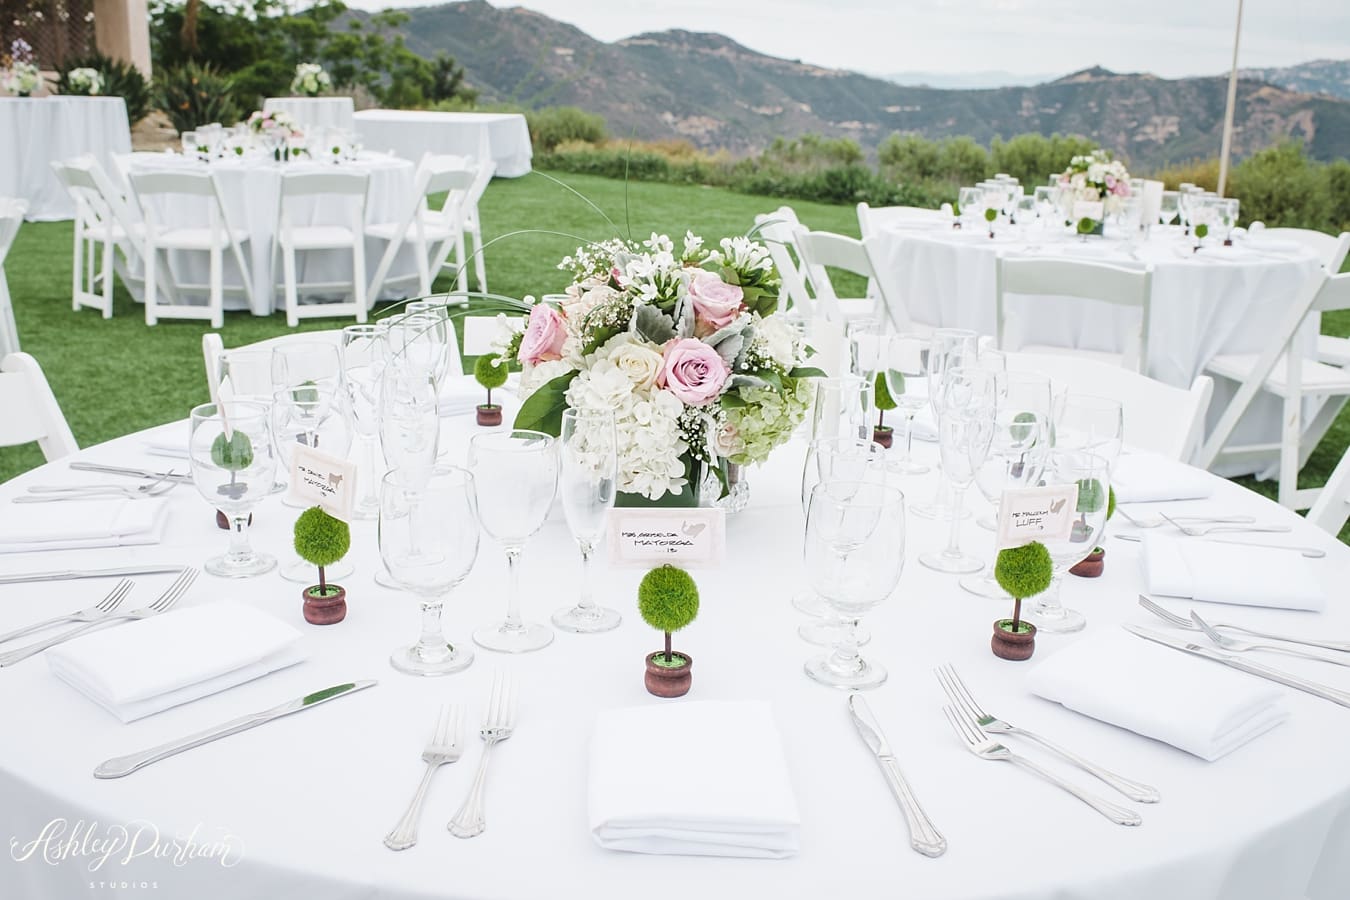  rancho chiquita wedding, malibu wedding photographer, wedding table pics, pink flowers on tables for wedding